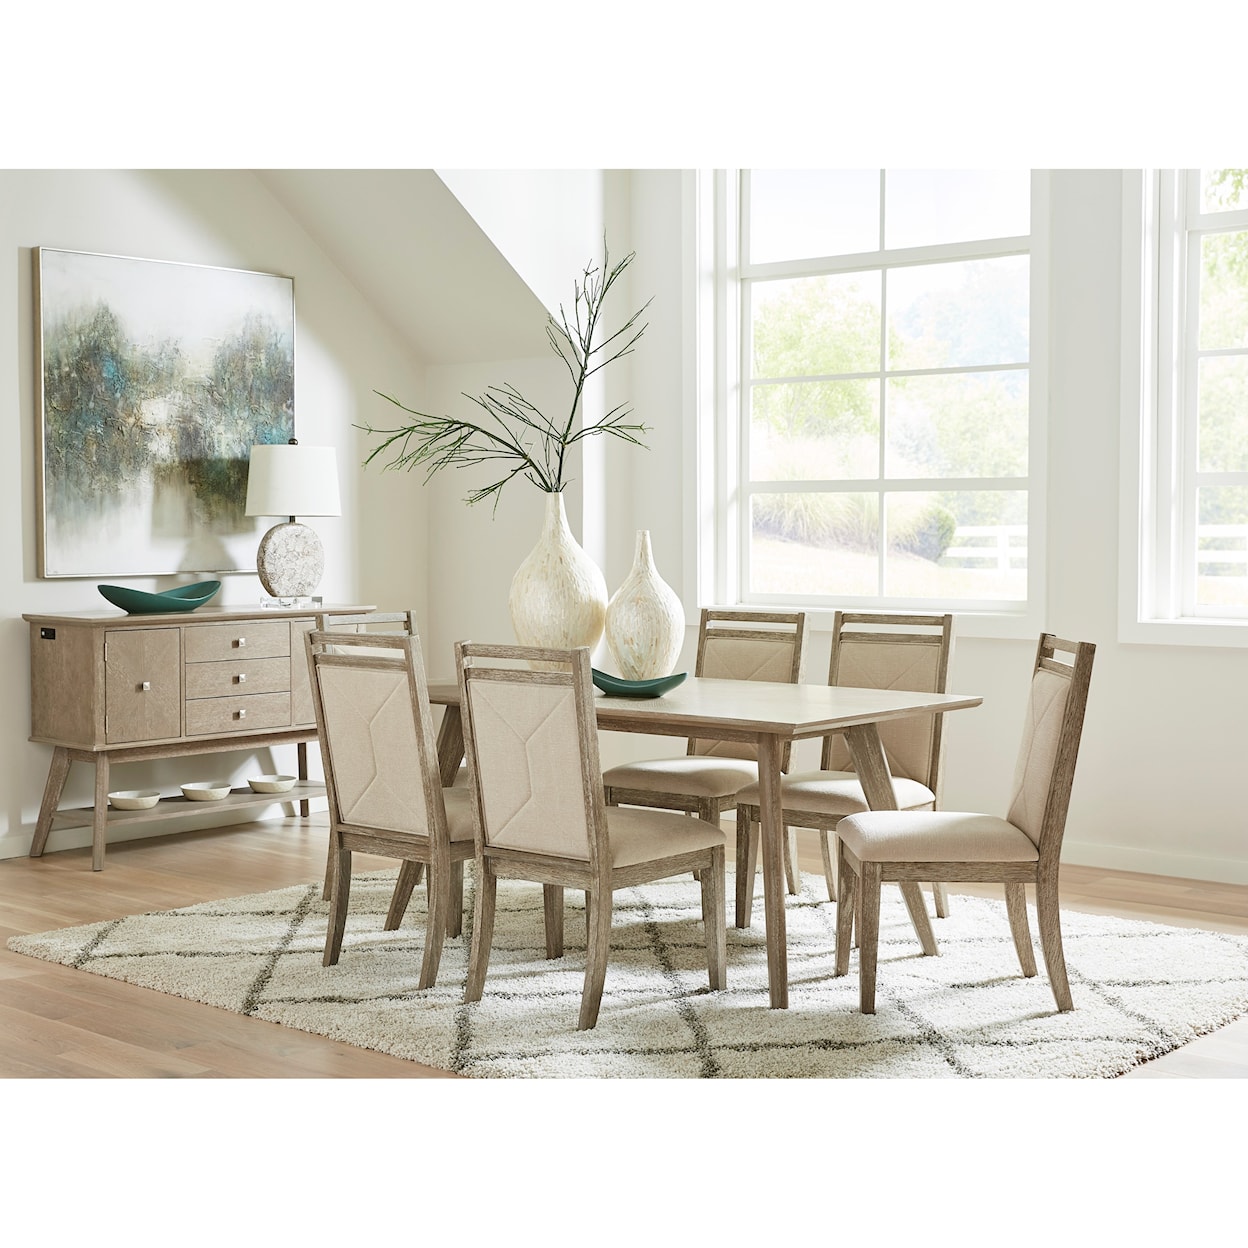 Progressive Furniture Beck Dining Table